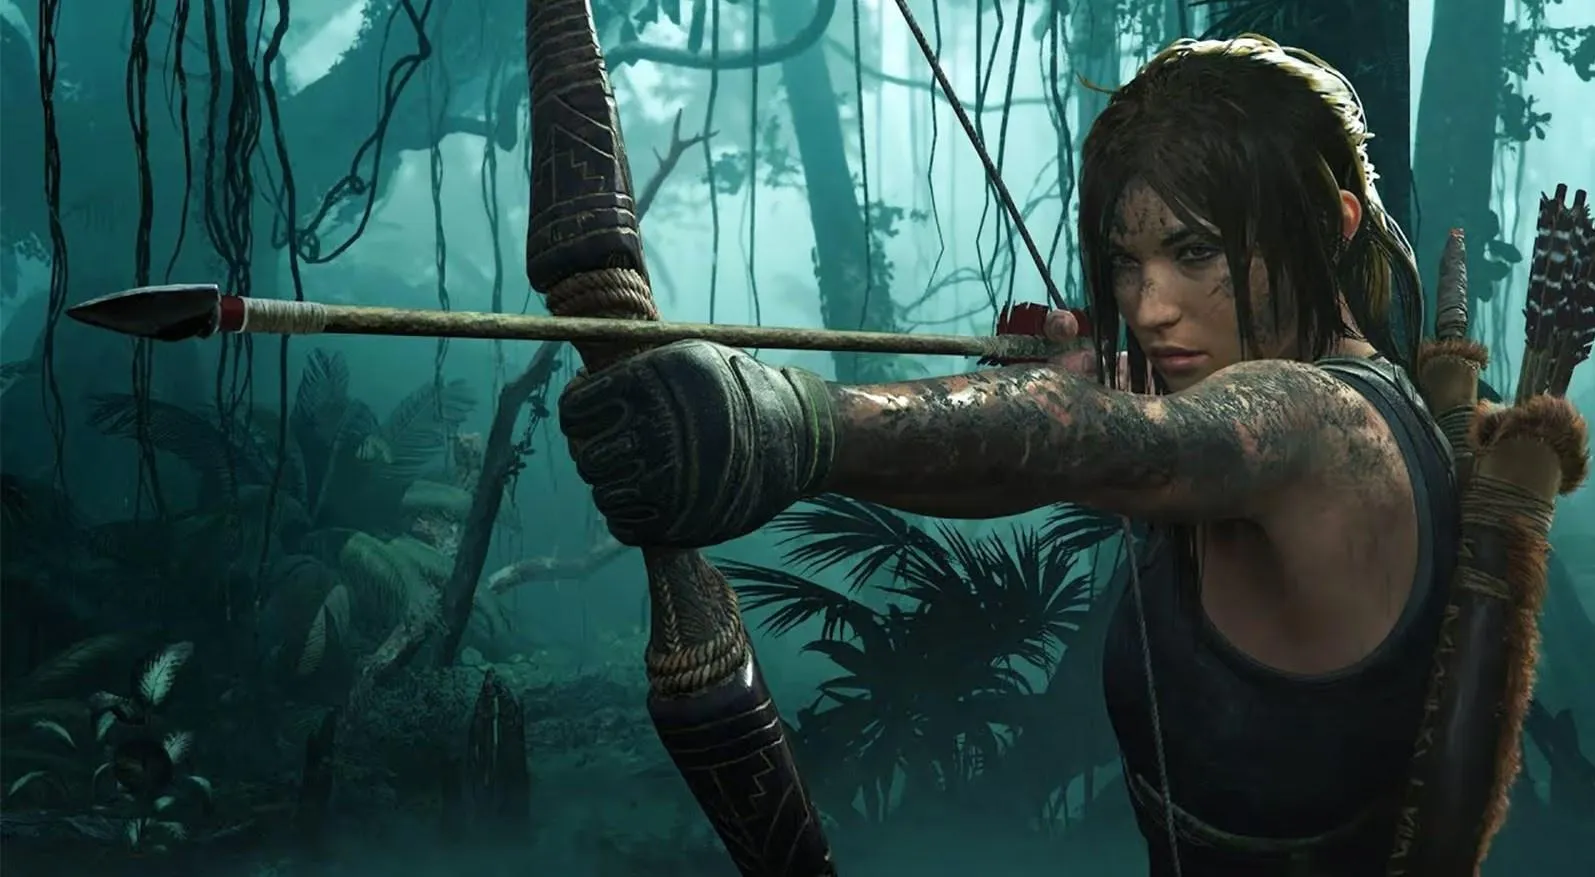 Lara croft notching her bow